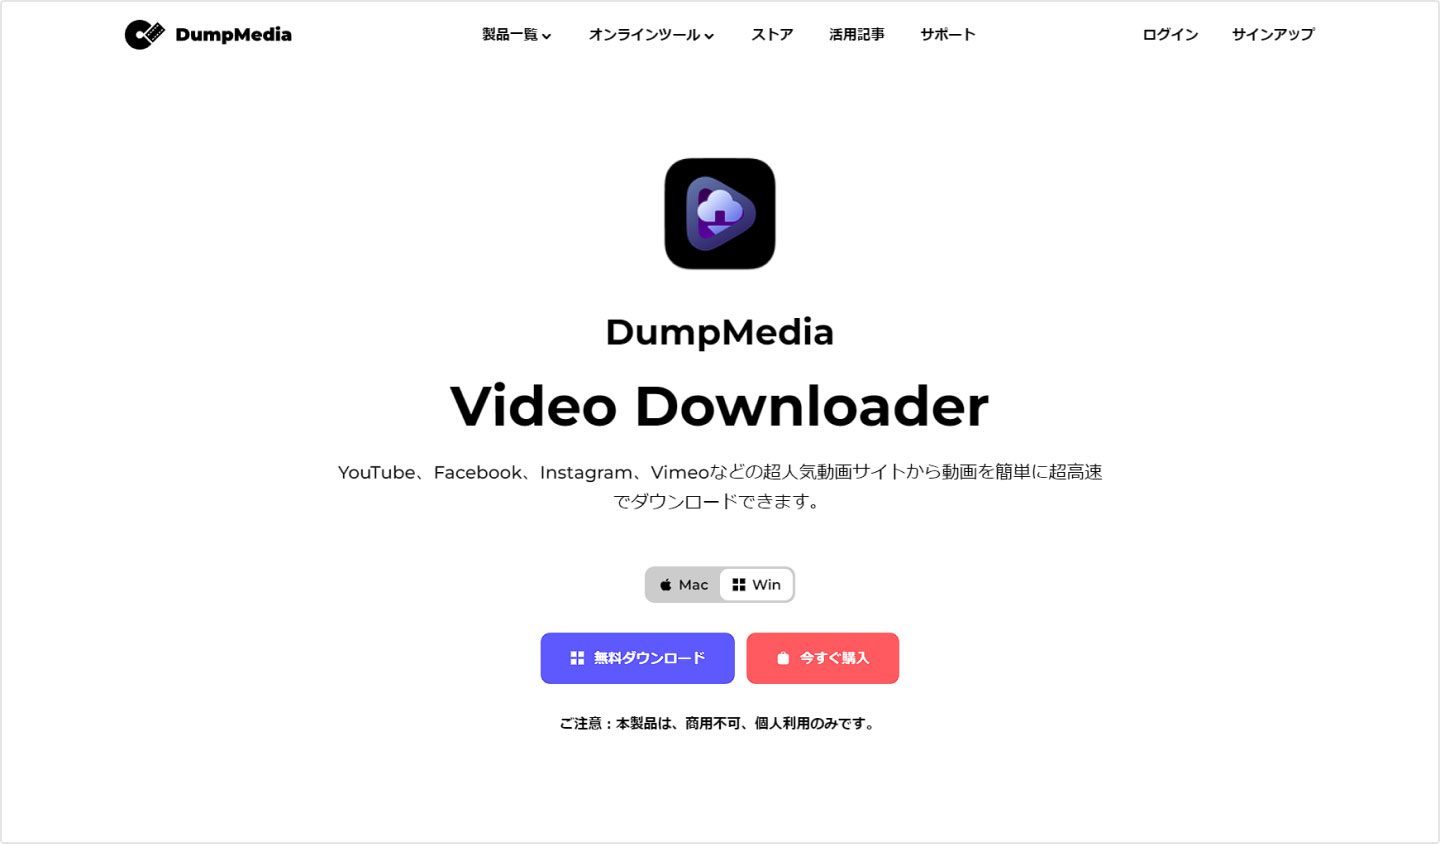 DumpMedia 動画ダウンローダー